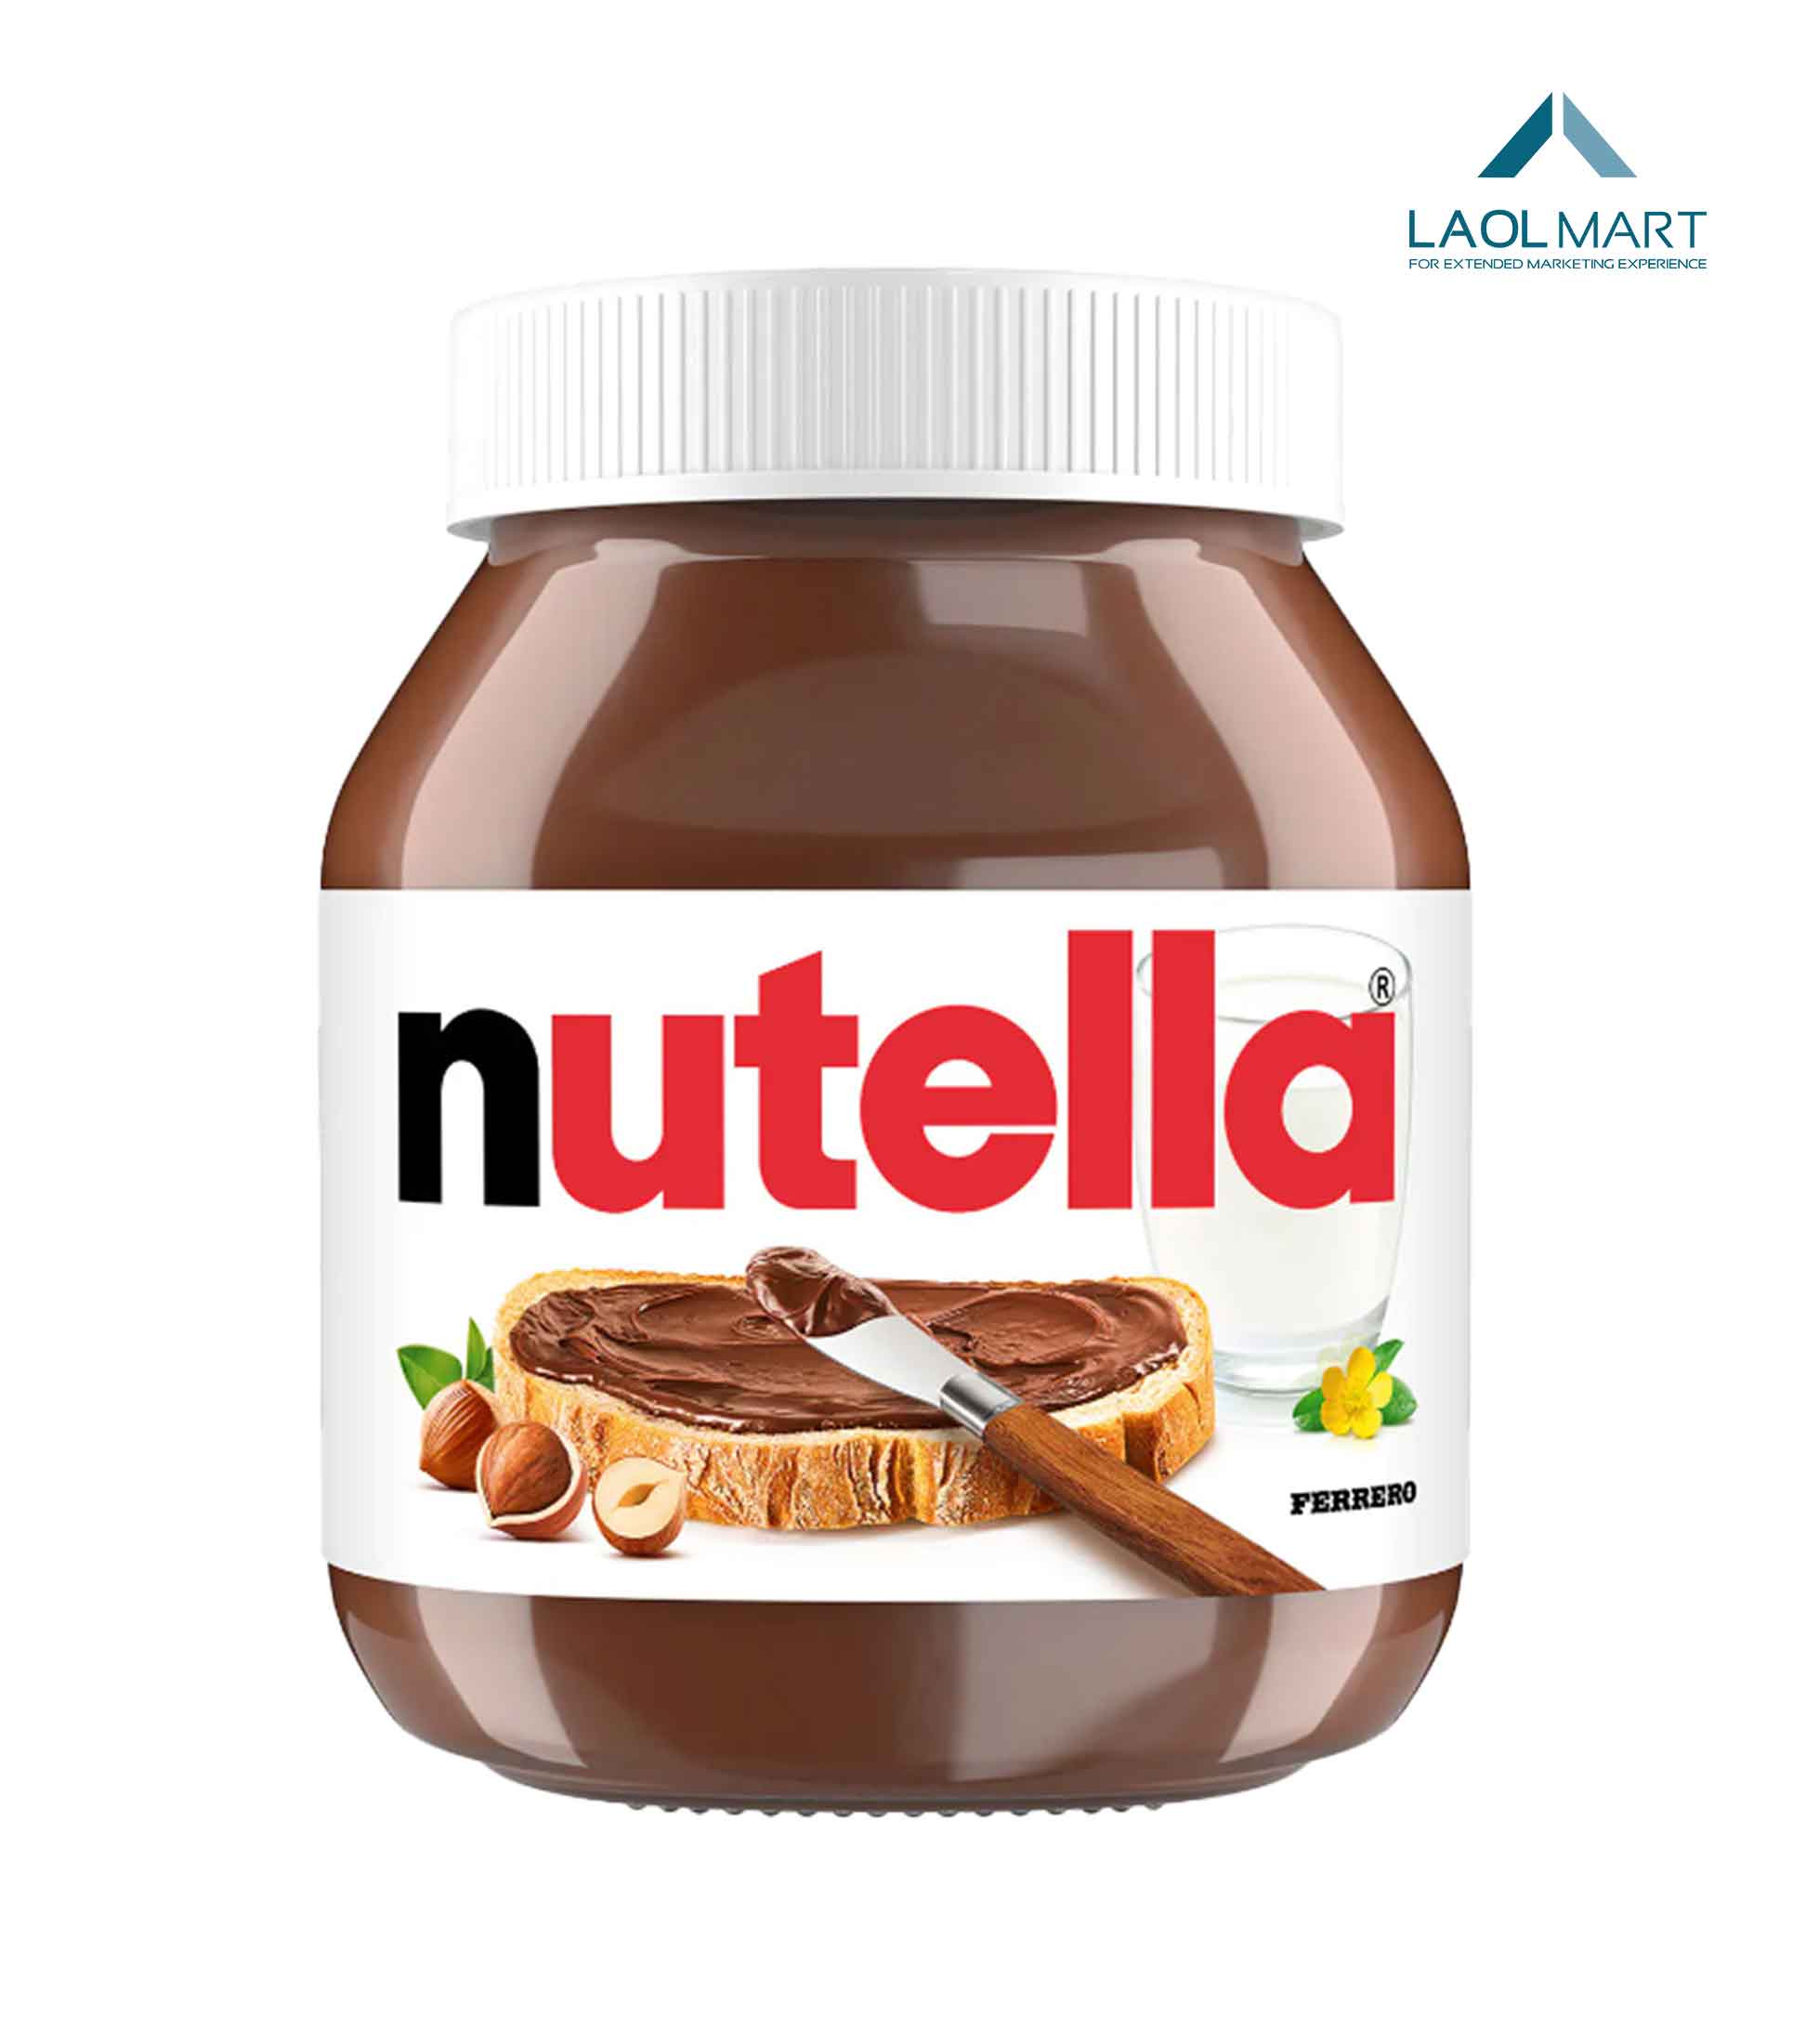 Nutella 400g - Hazelnut Spread with Cocoa